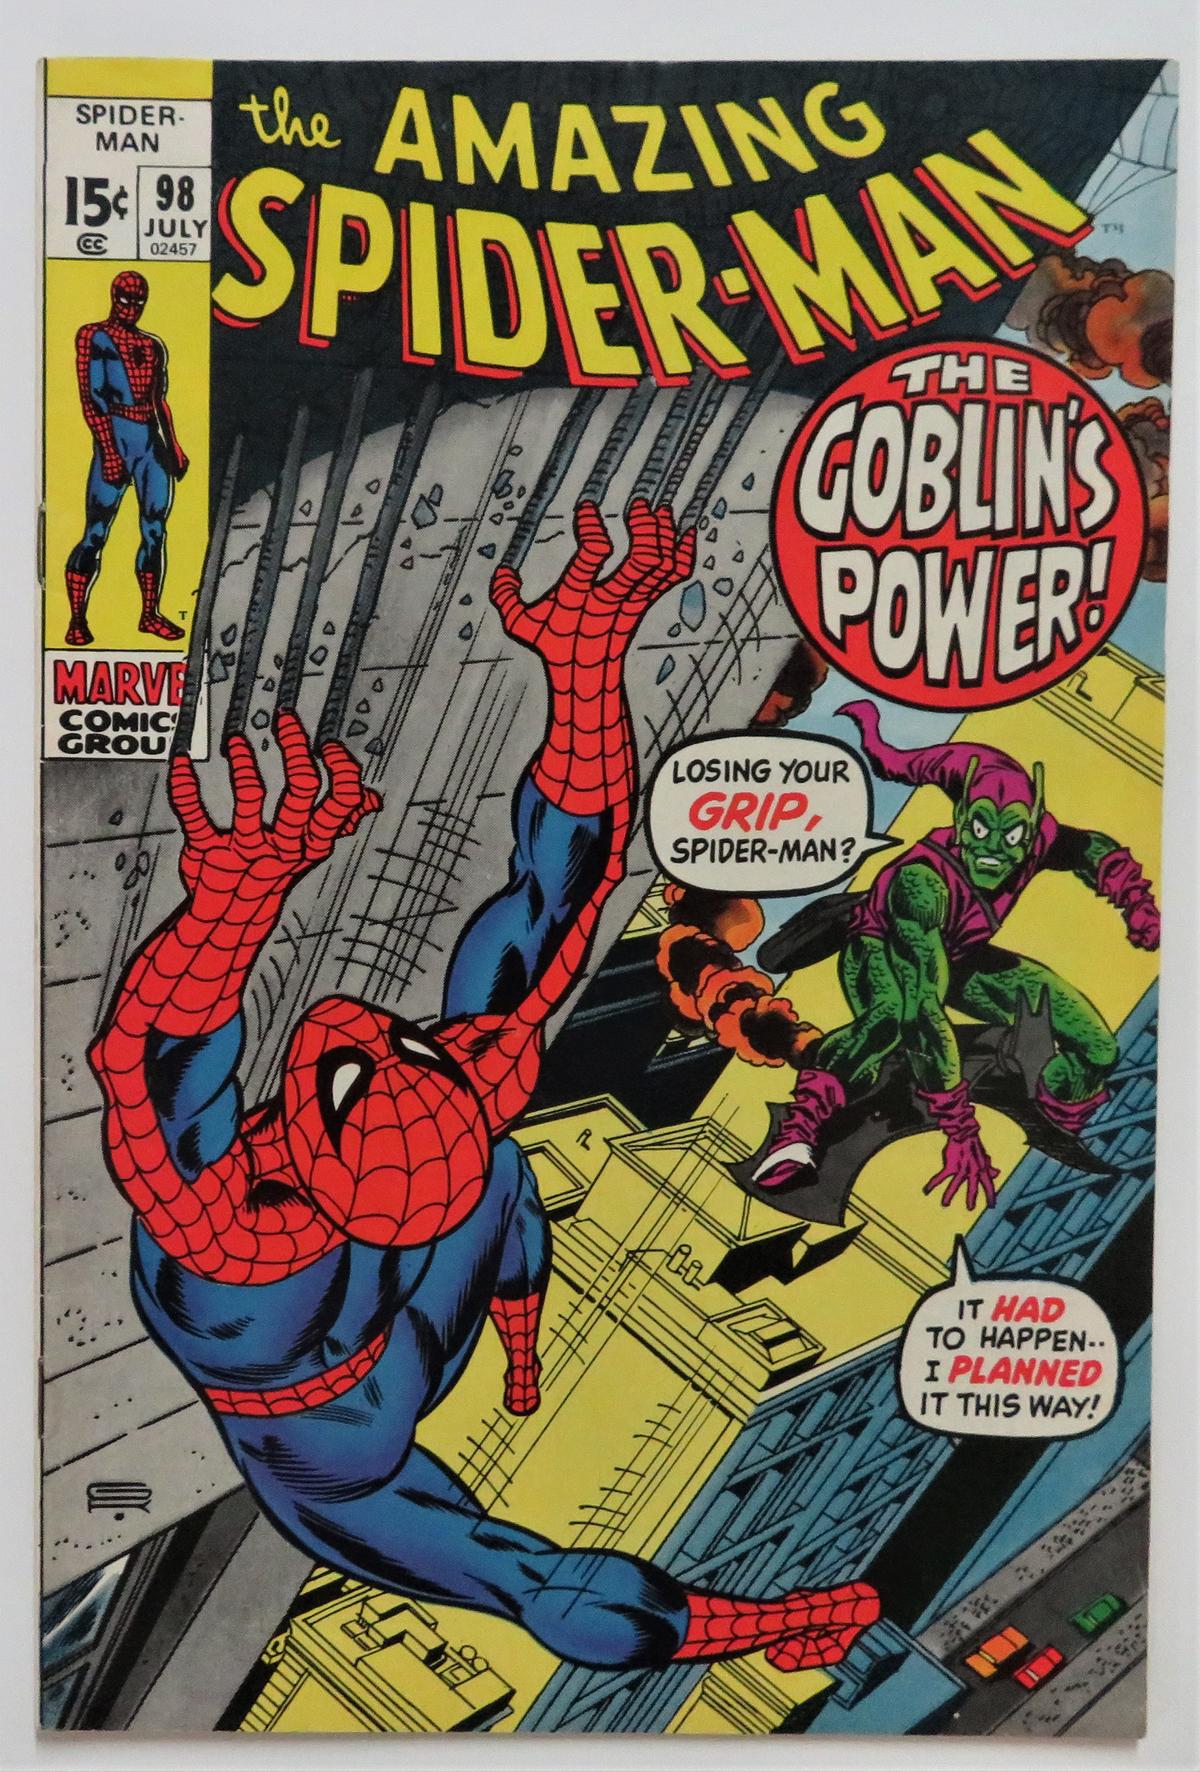 THE AMAZING SPIDER-MAN:  "The Goblin's Last Gasp!" - Marvel Comics